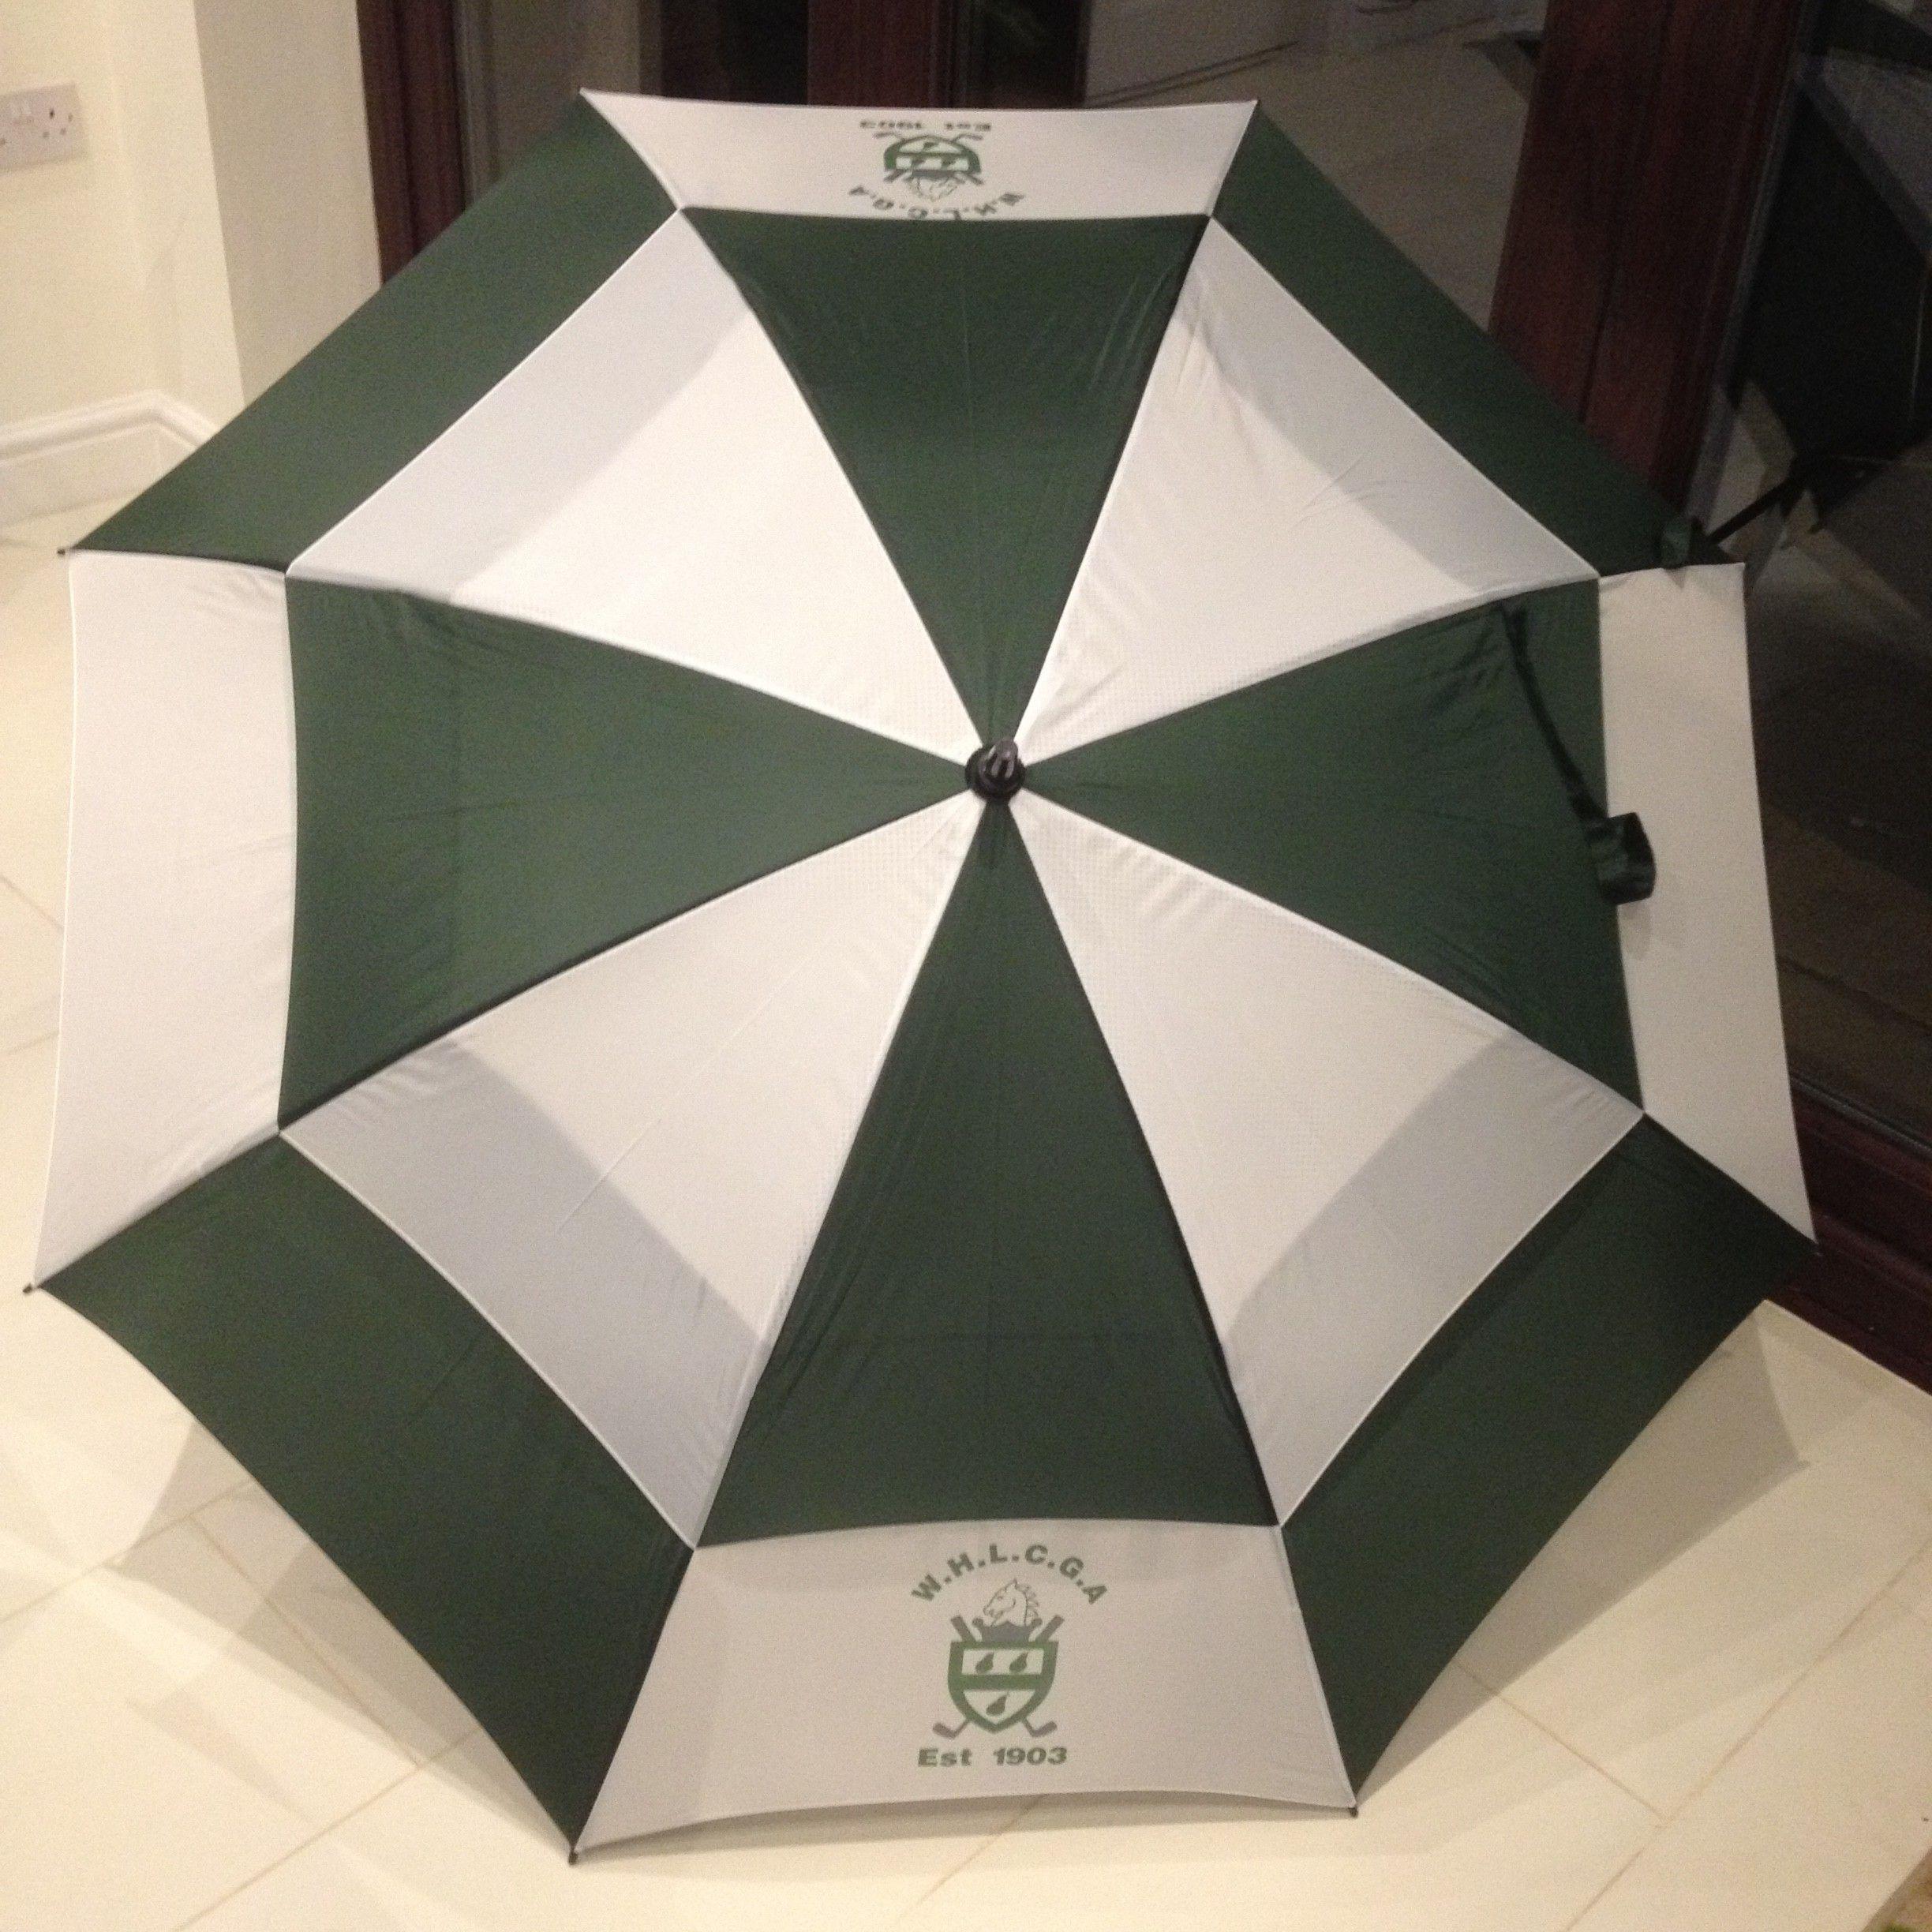 Green White C Logo - NEW Merchandise. Green White Vented Umbrellas With County Logo